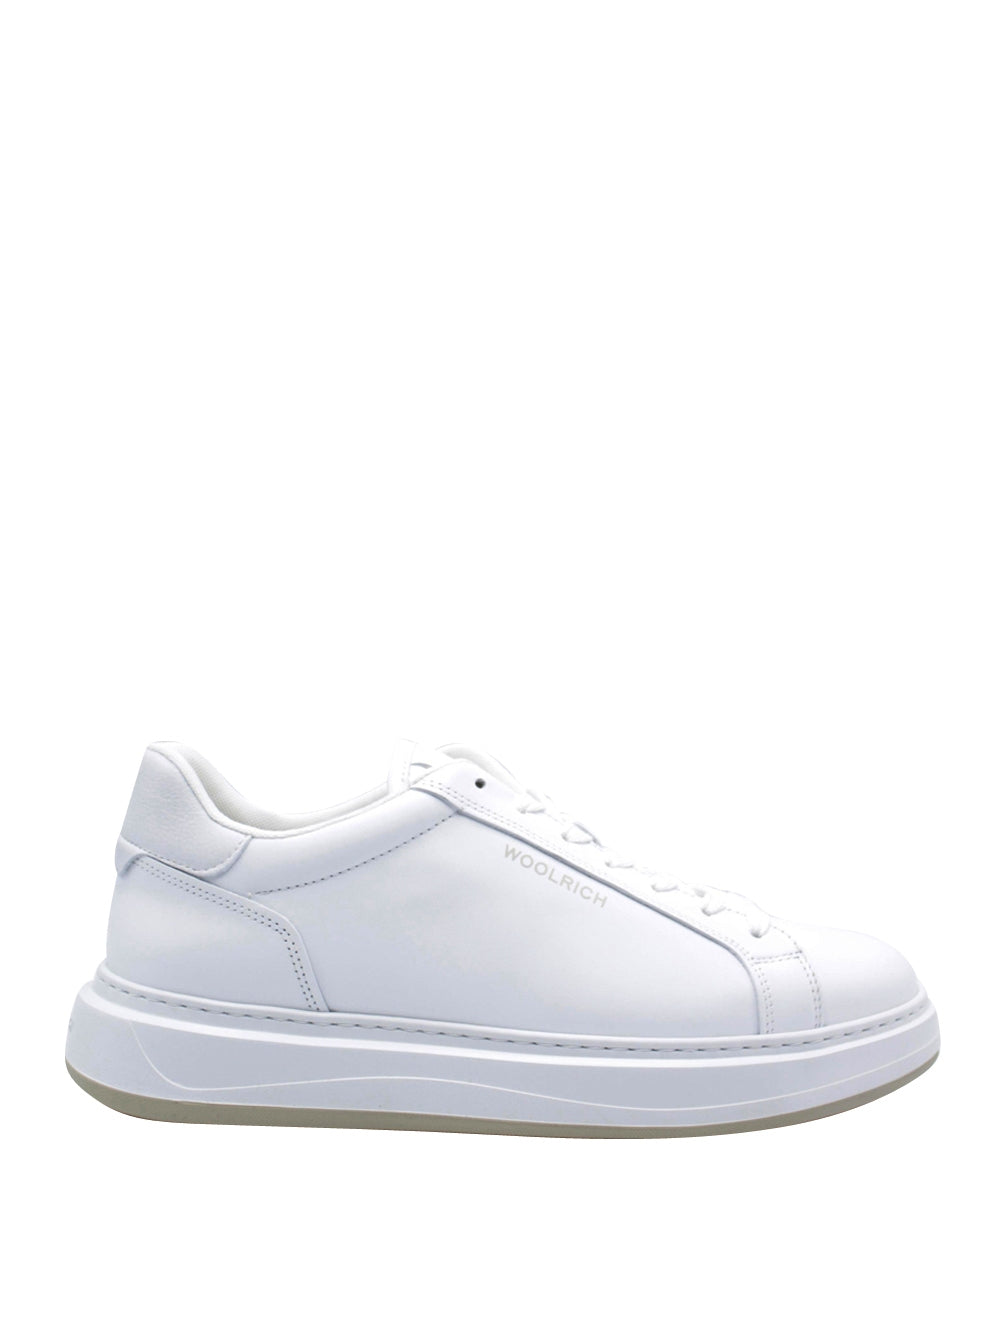 WOOLRICH Sneakers Uomo - Bianco modello WFM241.010